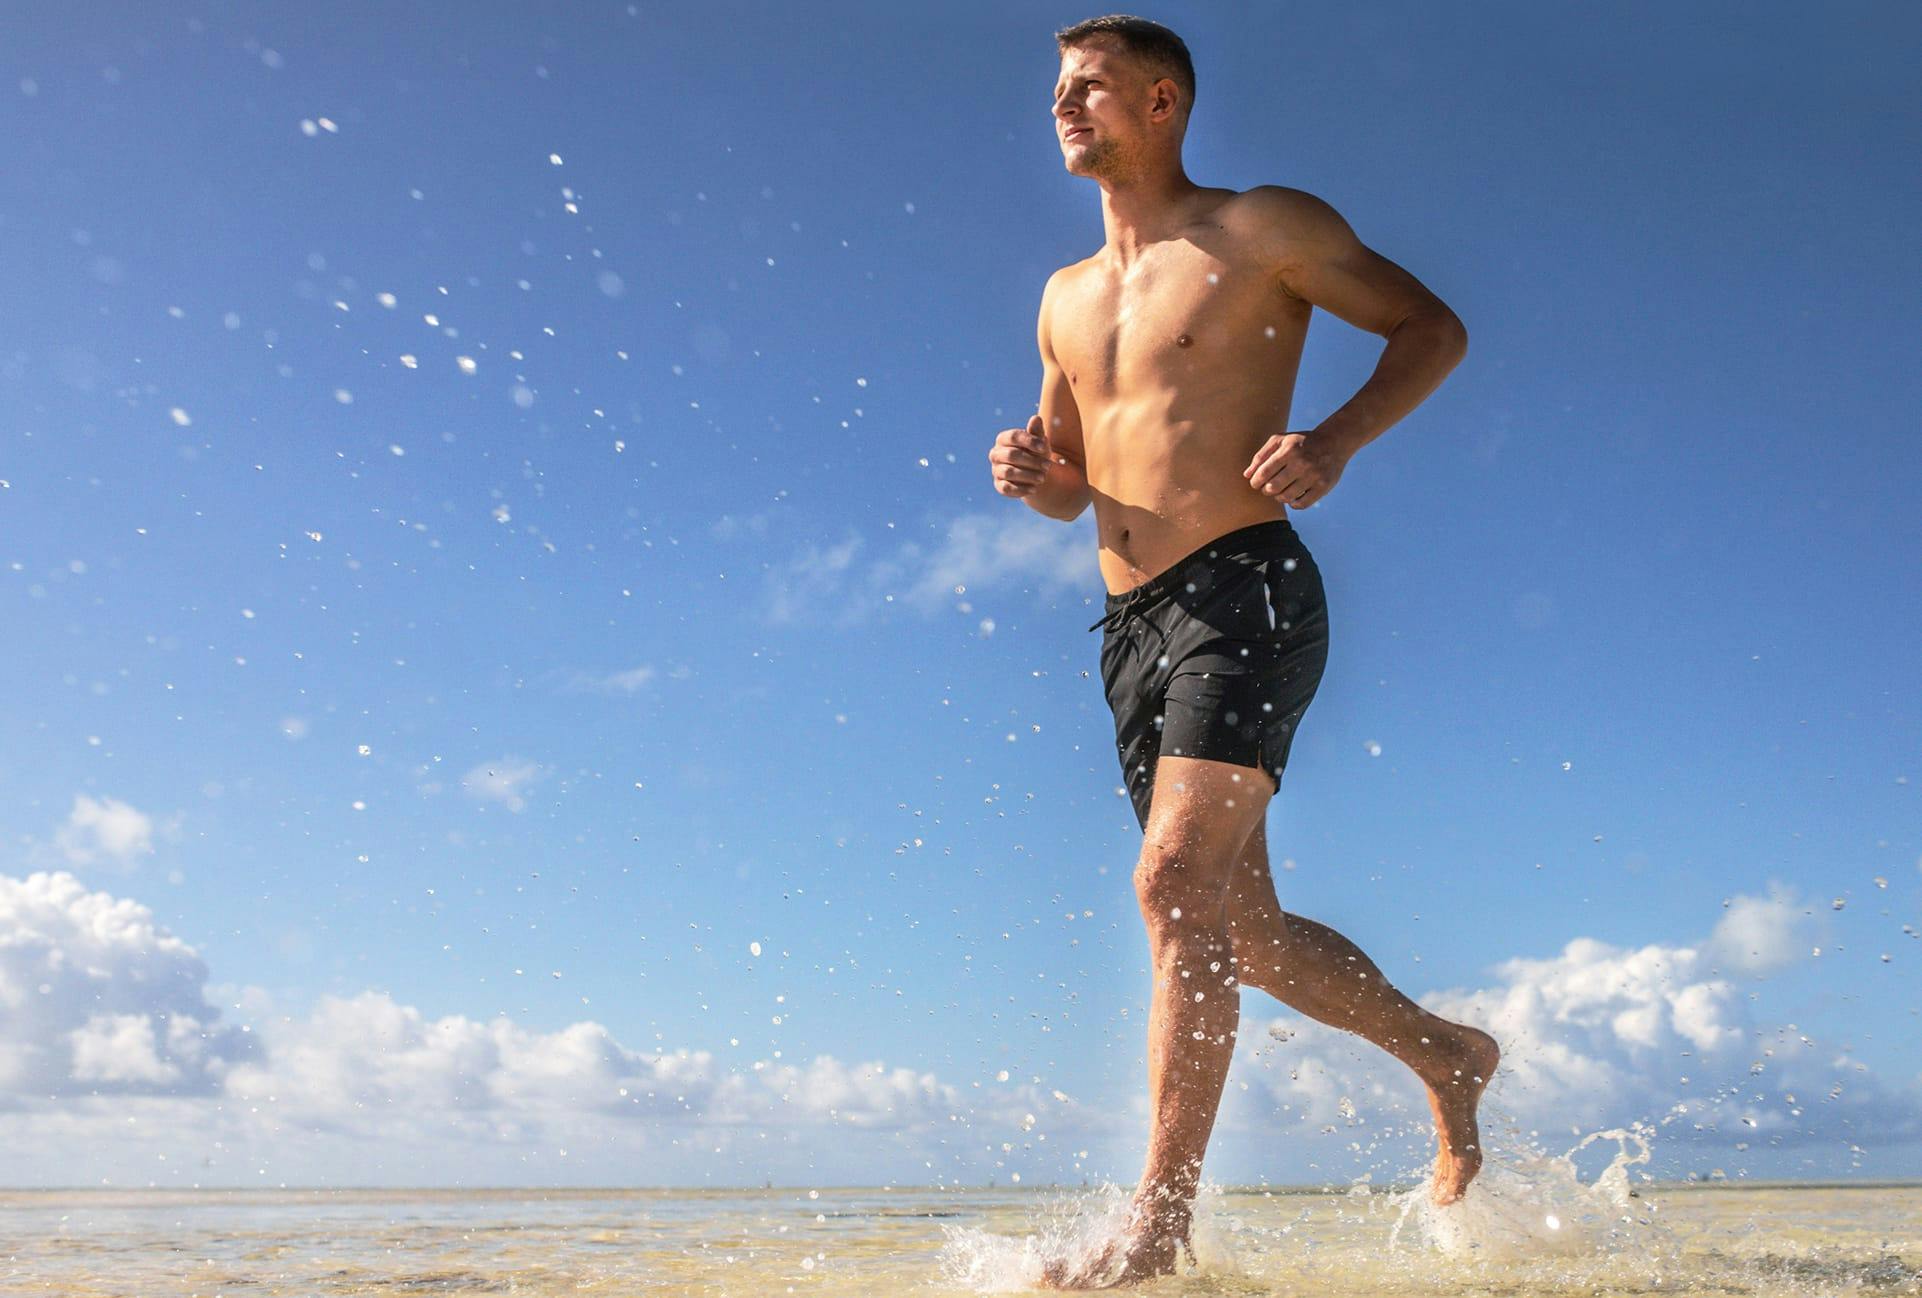 Man running on the beach shirtless